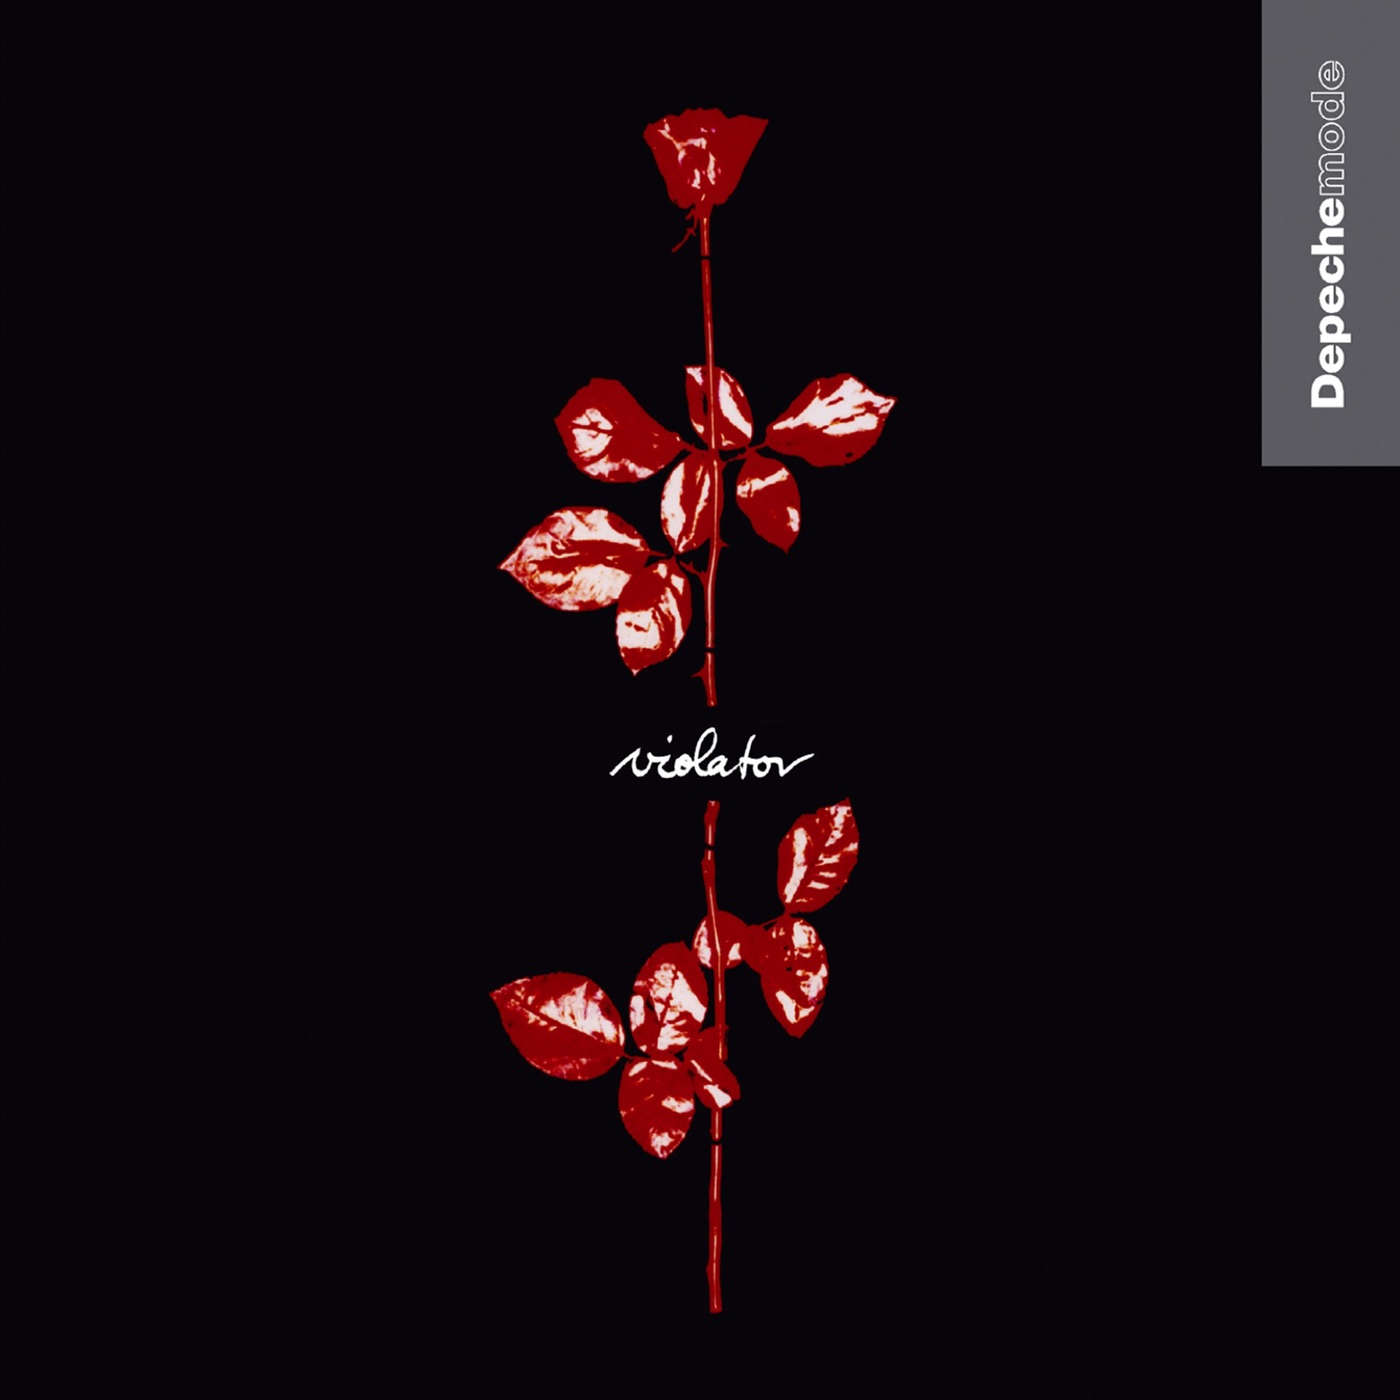 Violator (2006 Remaster) by Depeche Mode